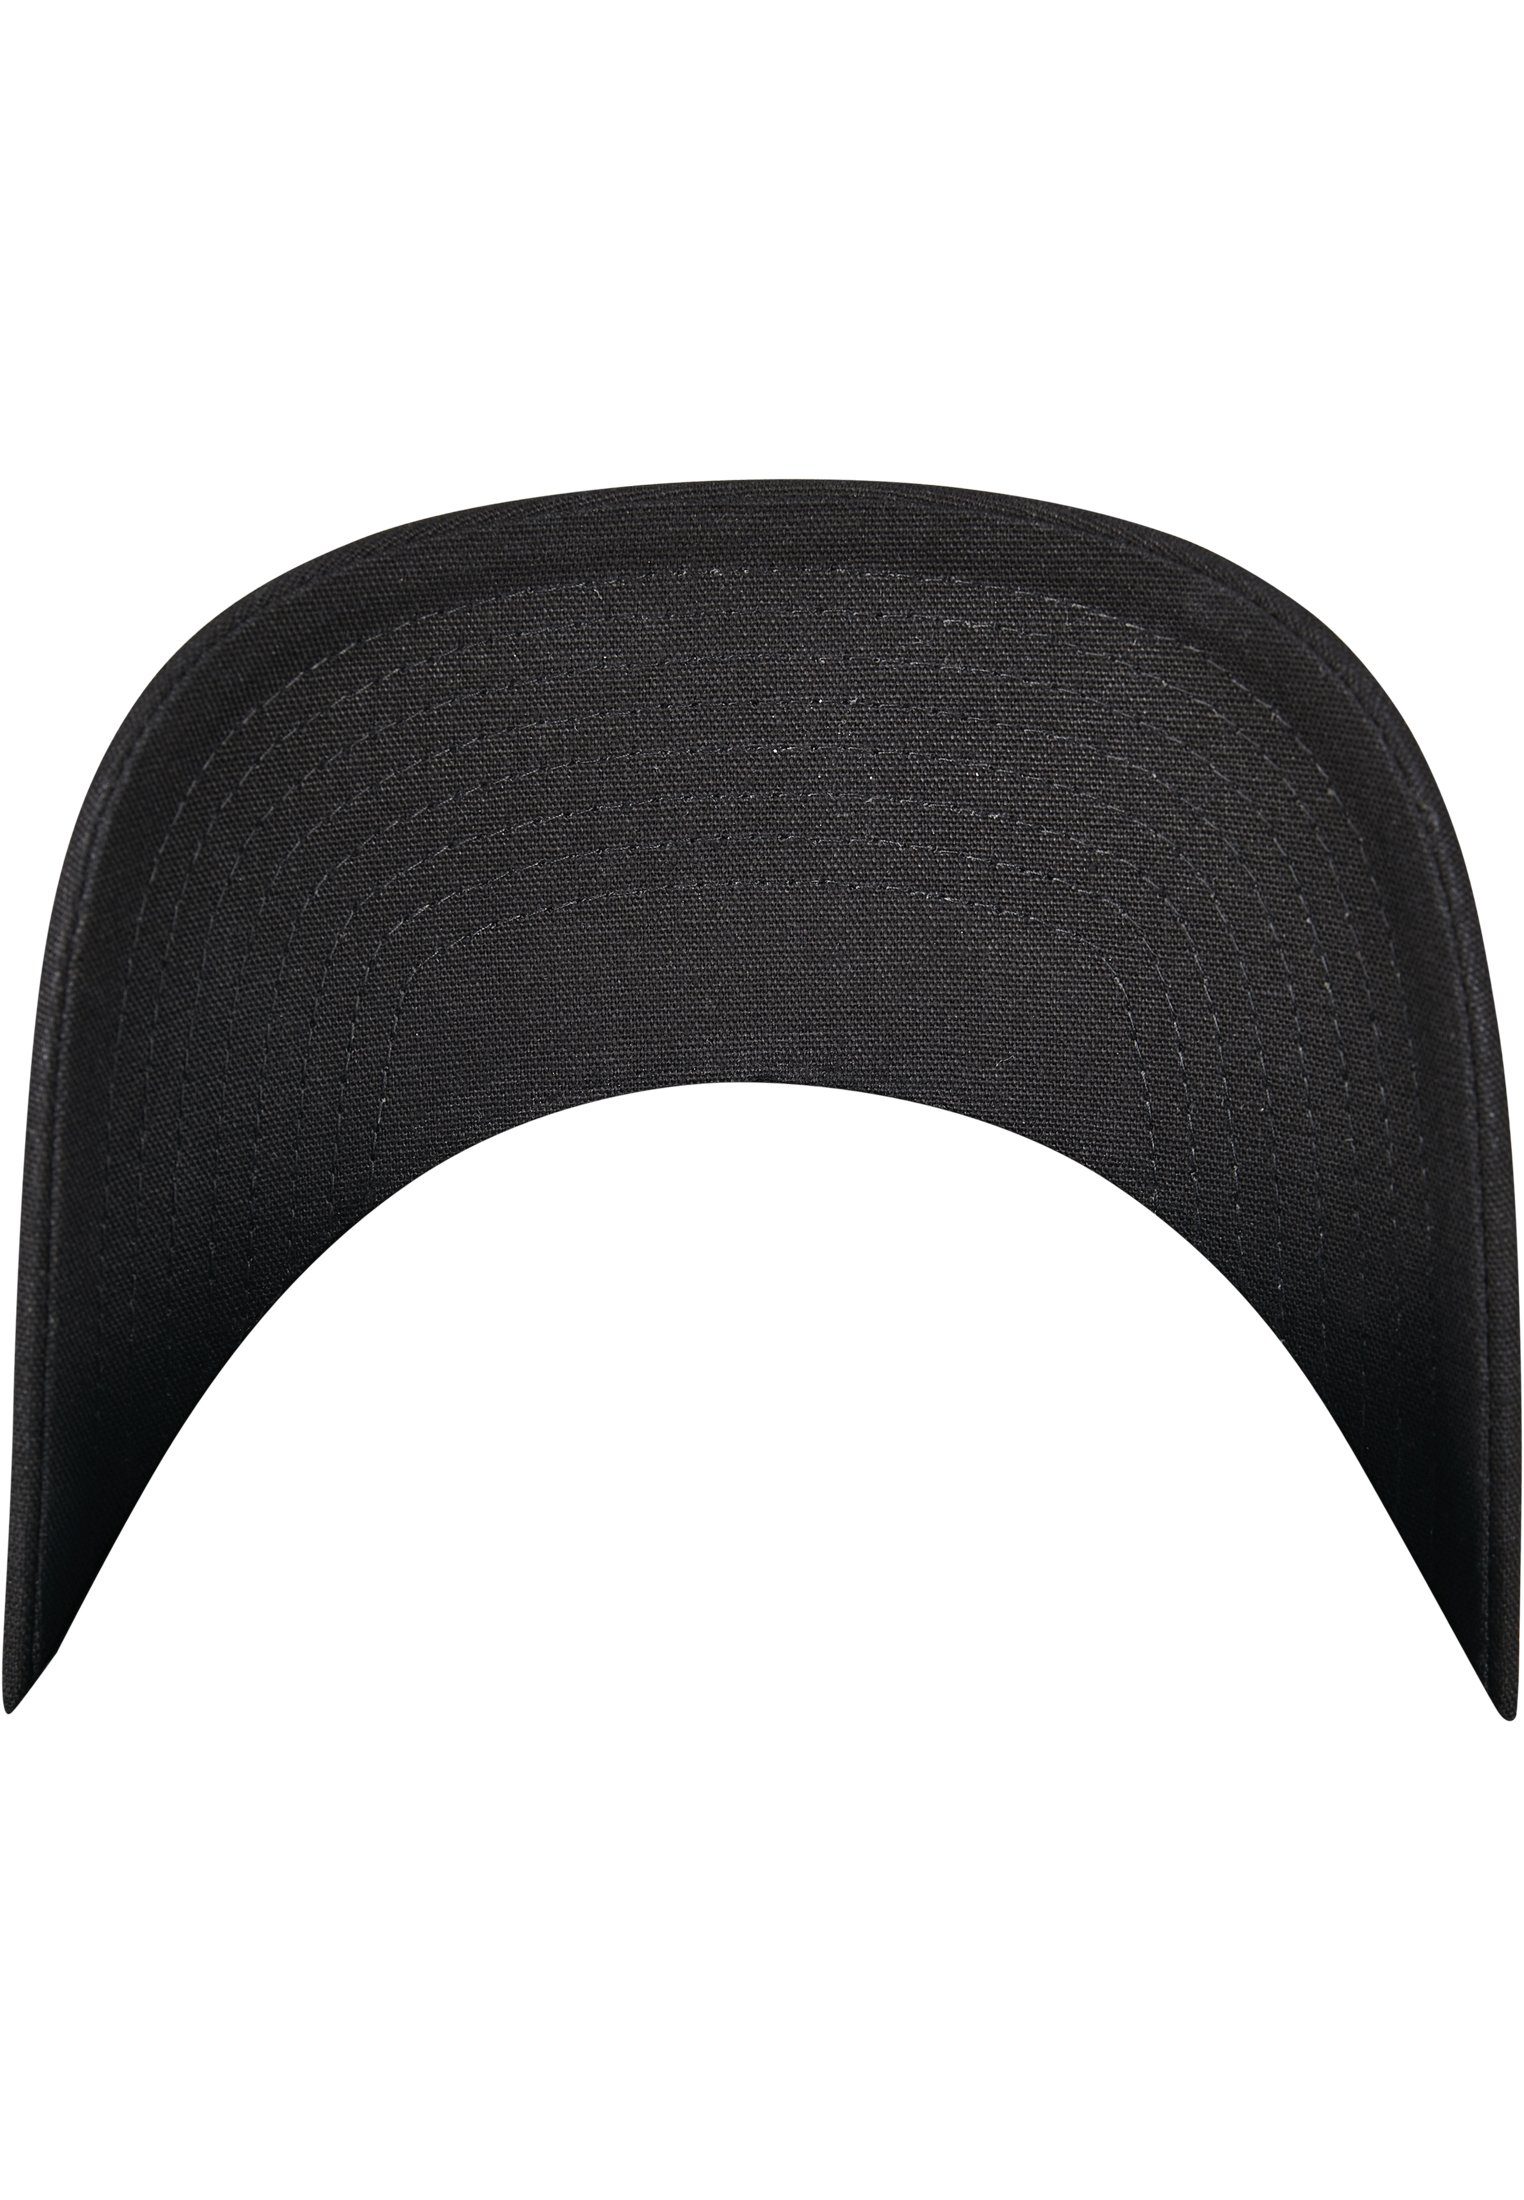 black Snapback Cap Metal Flex Snap Flexfit 6-Panel Curved